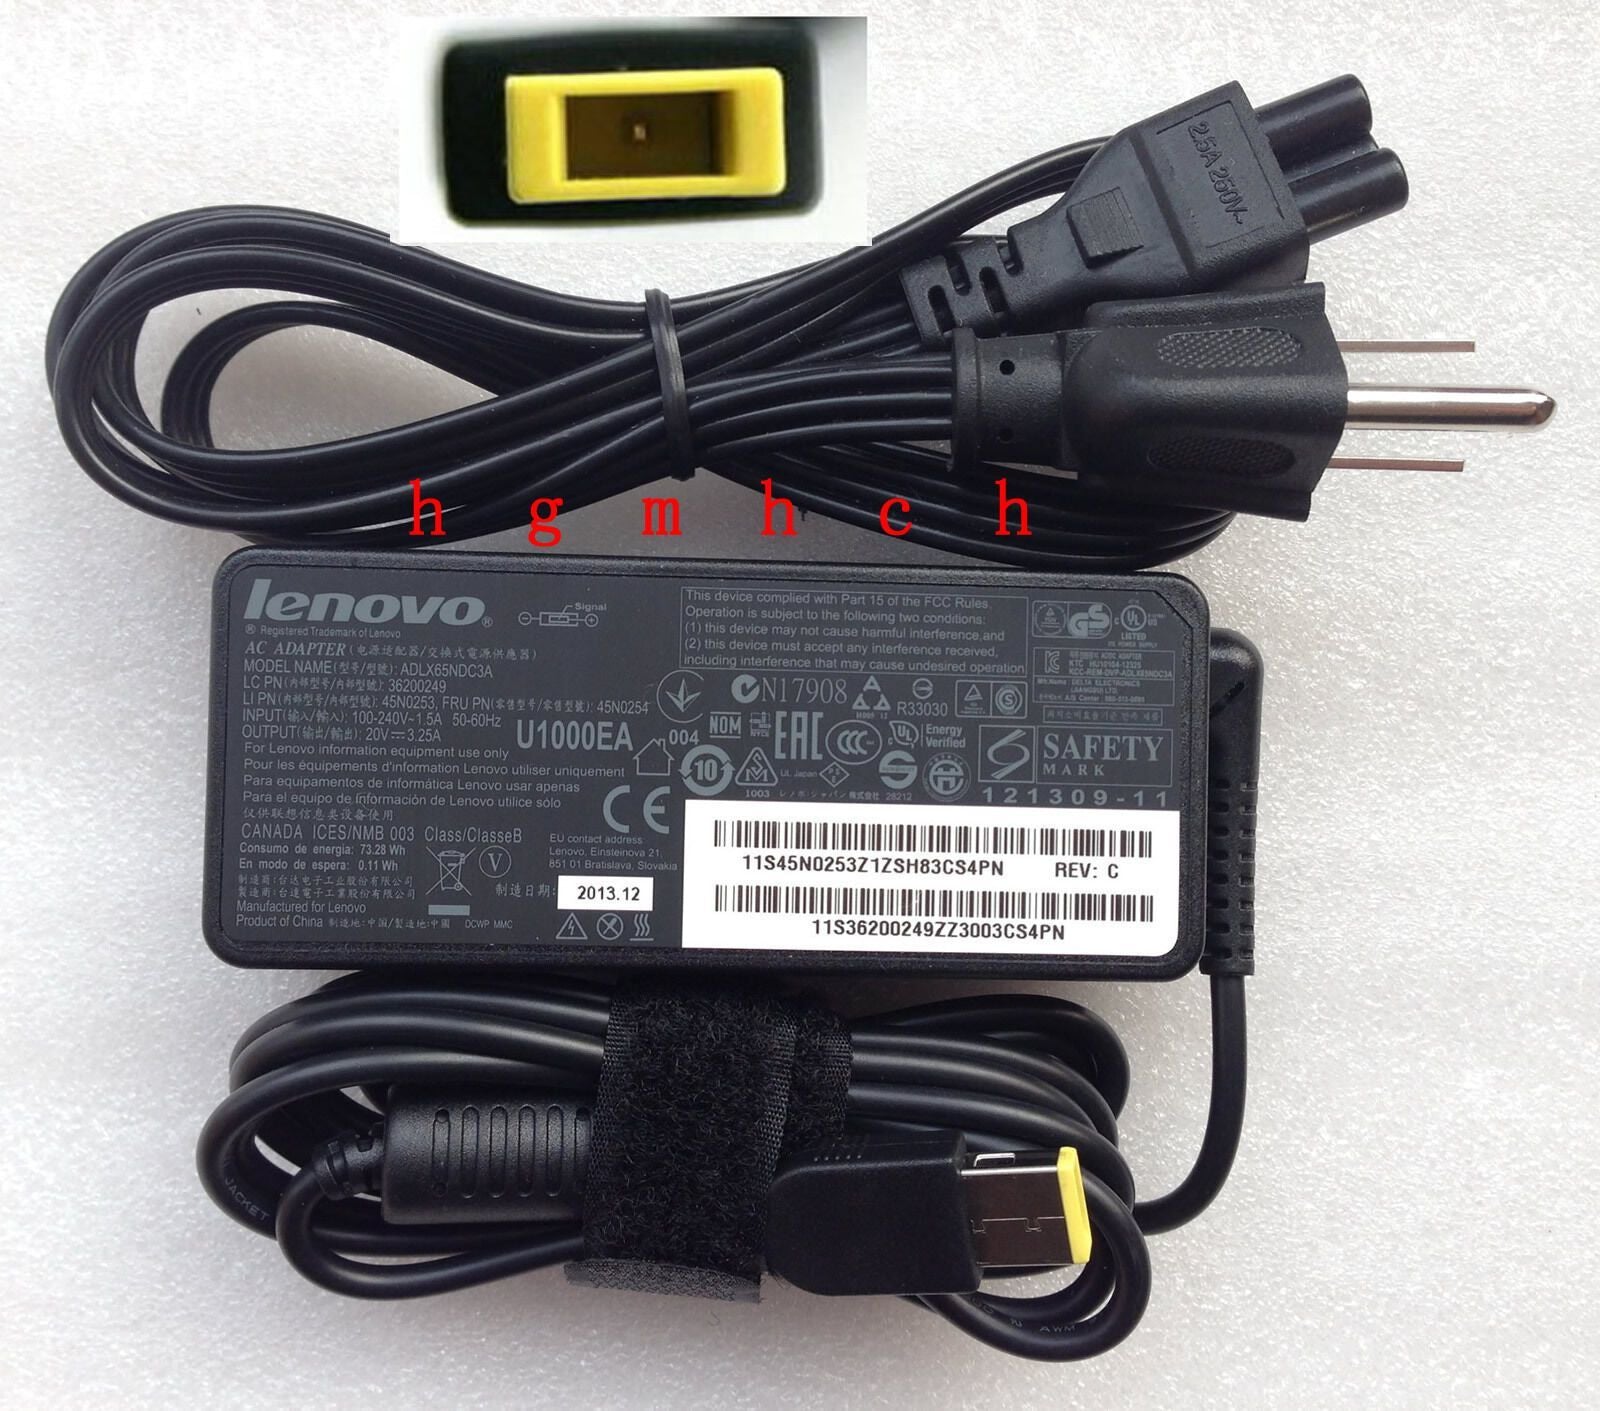 OEM Original Lenovo AC Adapter Charger Z70-80 80FG0038US,ADLX65NDC3A,36200249